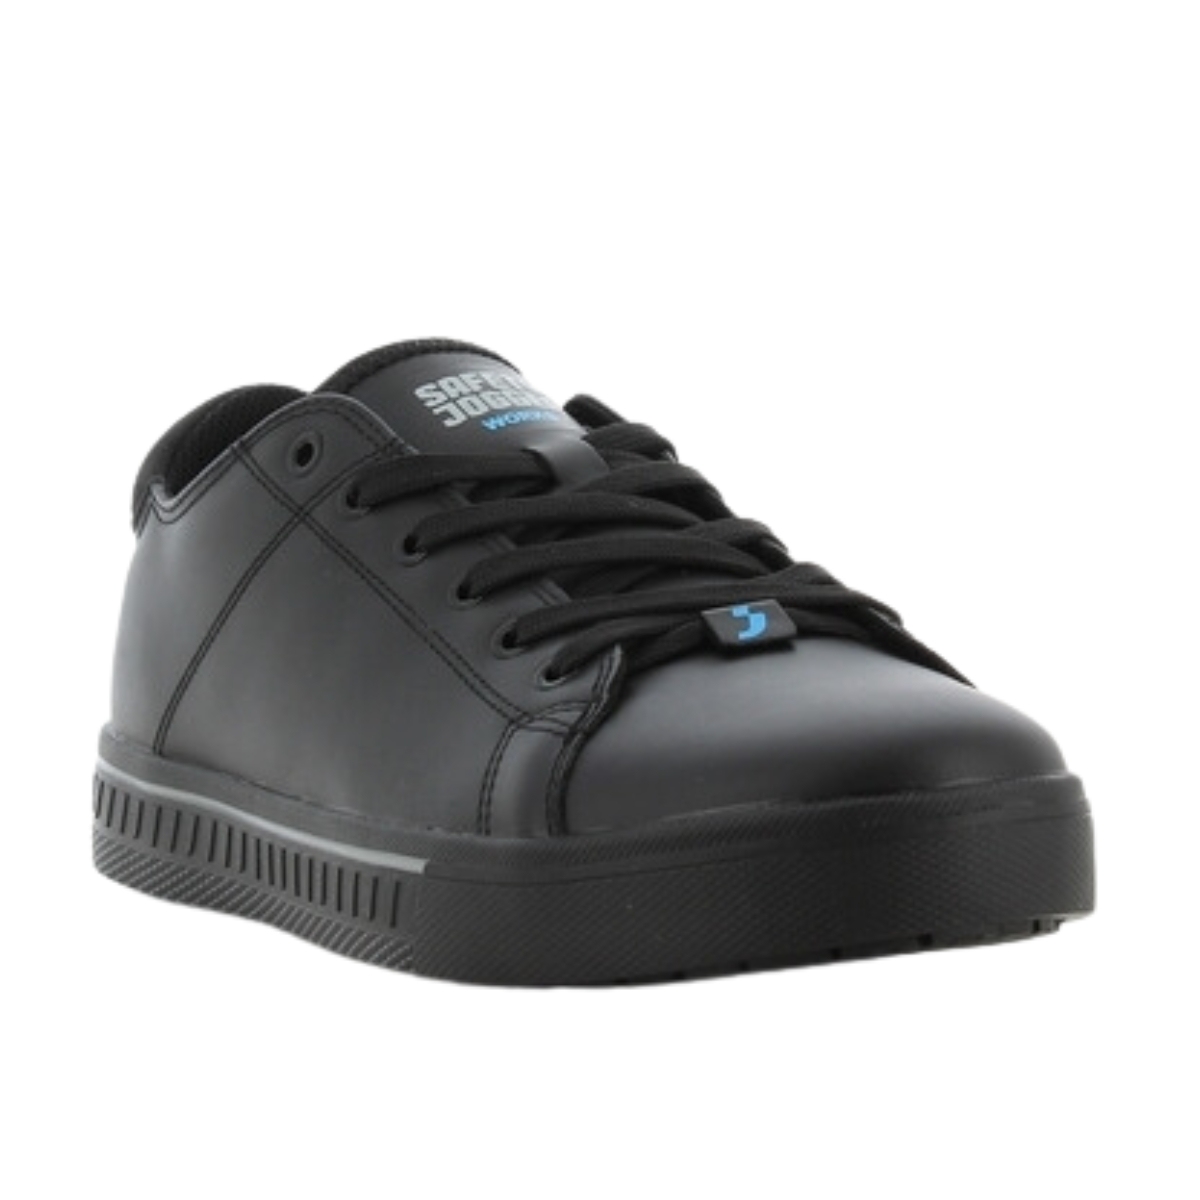 Zapato negro deportivo antideslizante de cuero napa